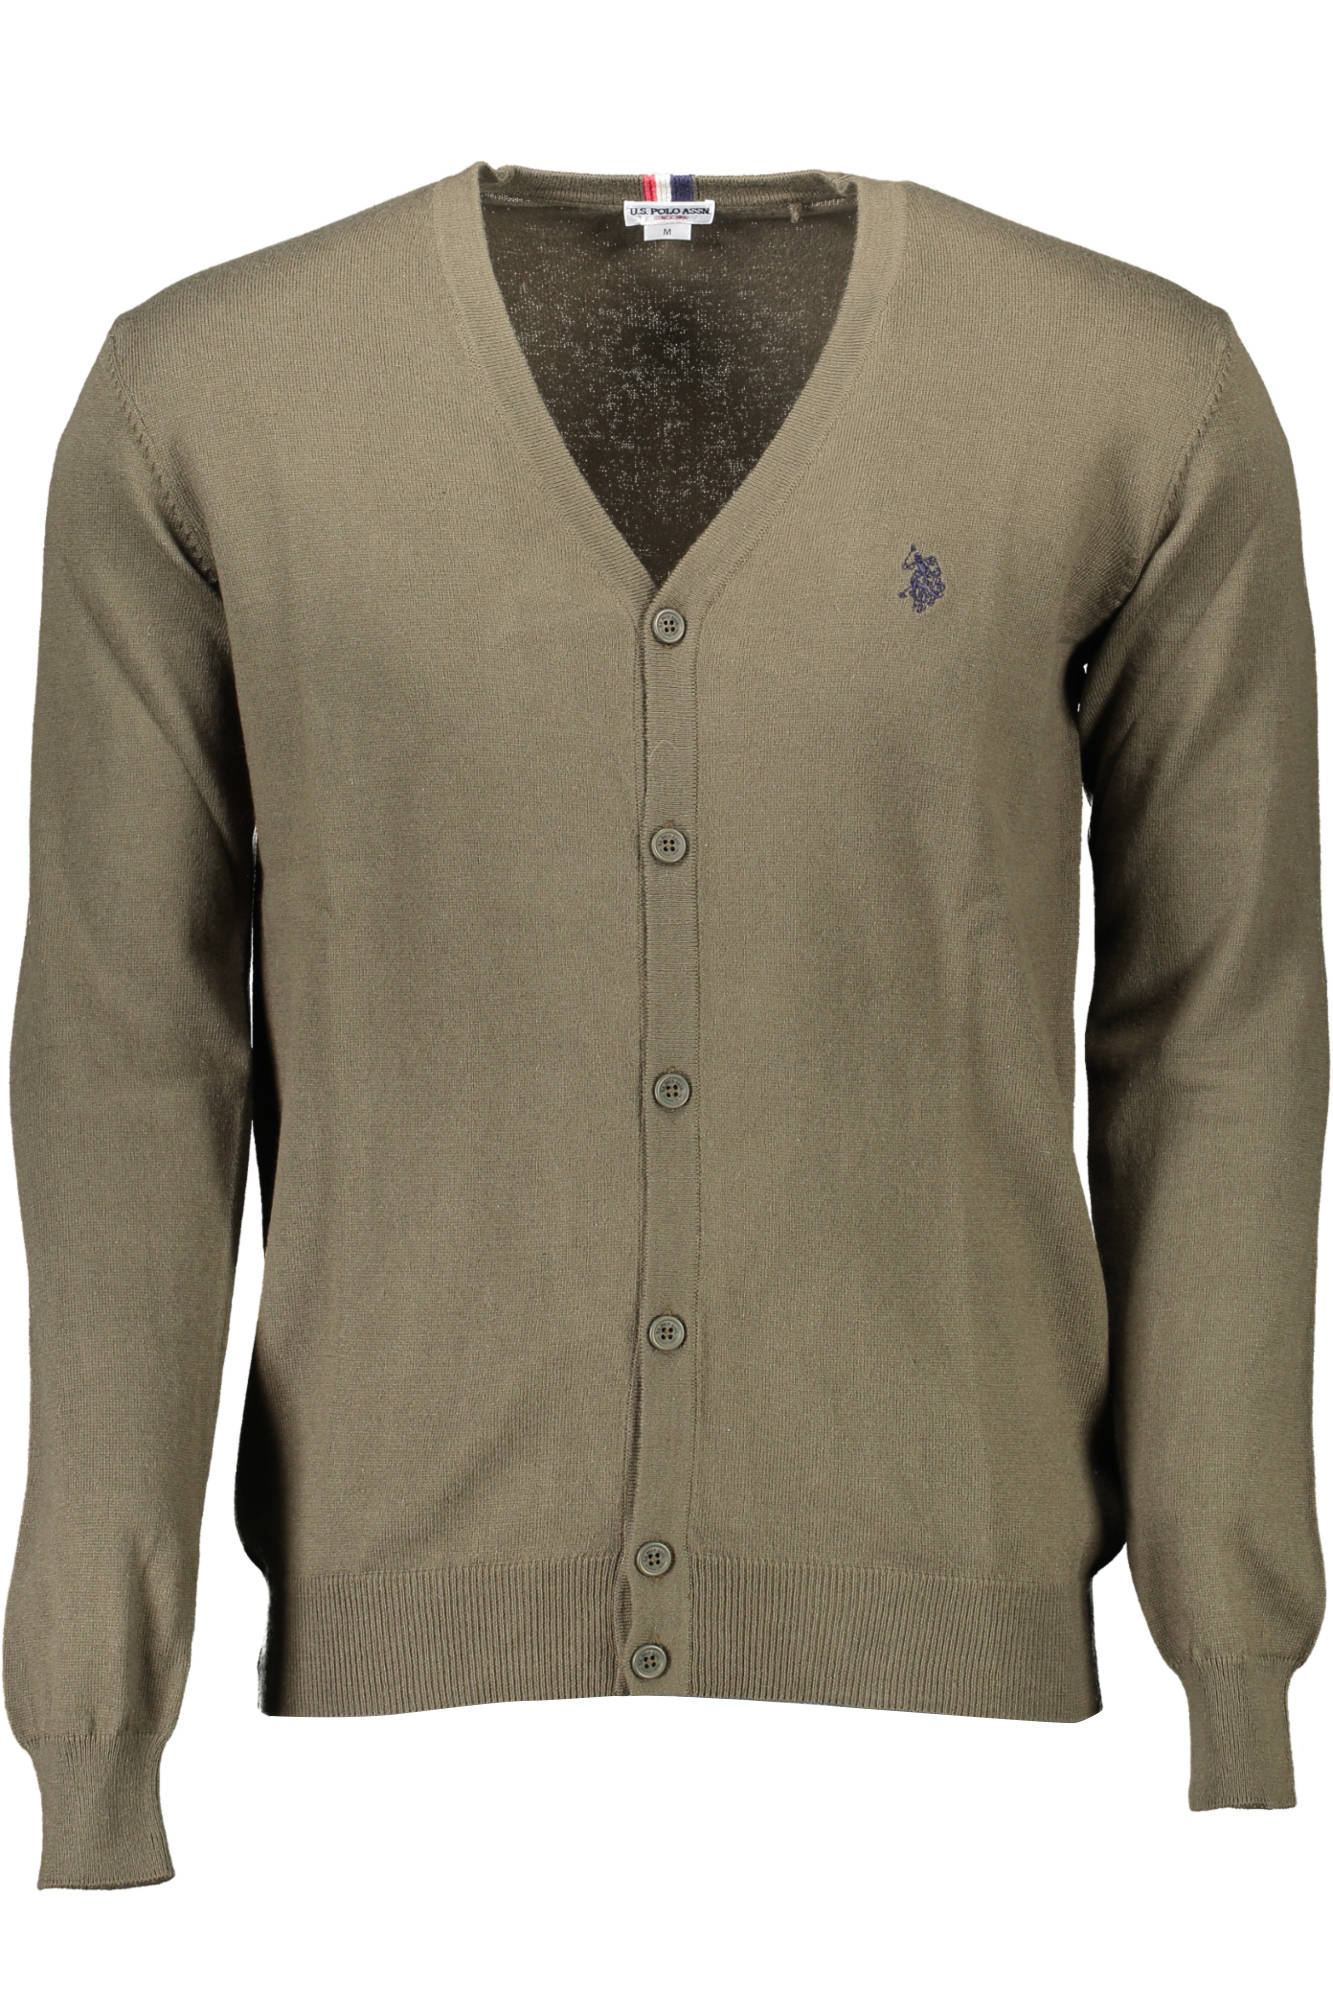 U.S. POLO ASSN. Green Cotton Sweater - Fizigo